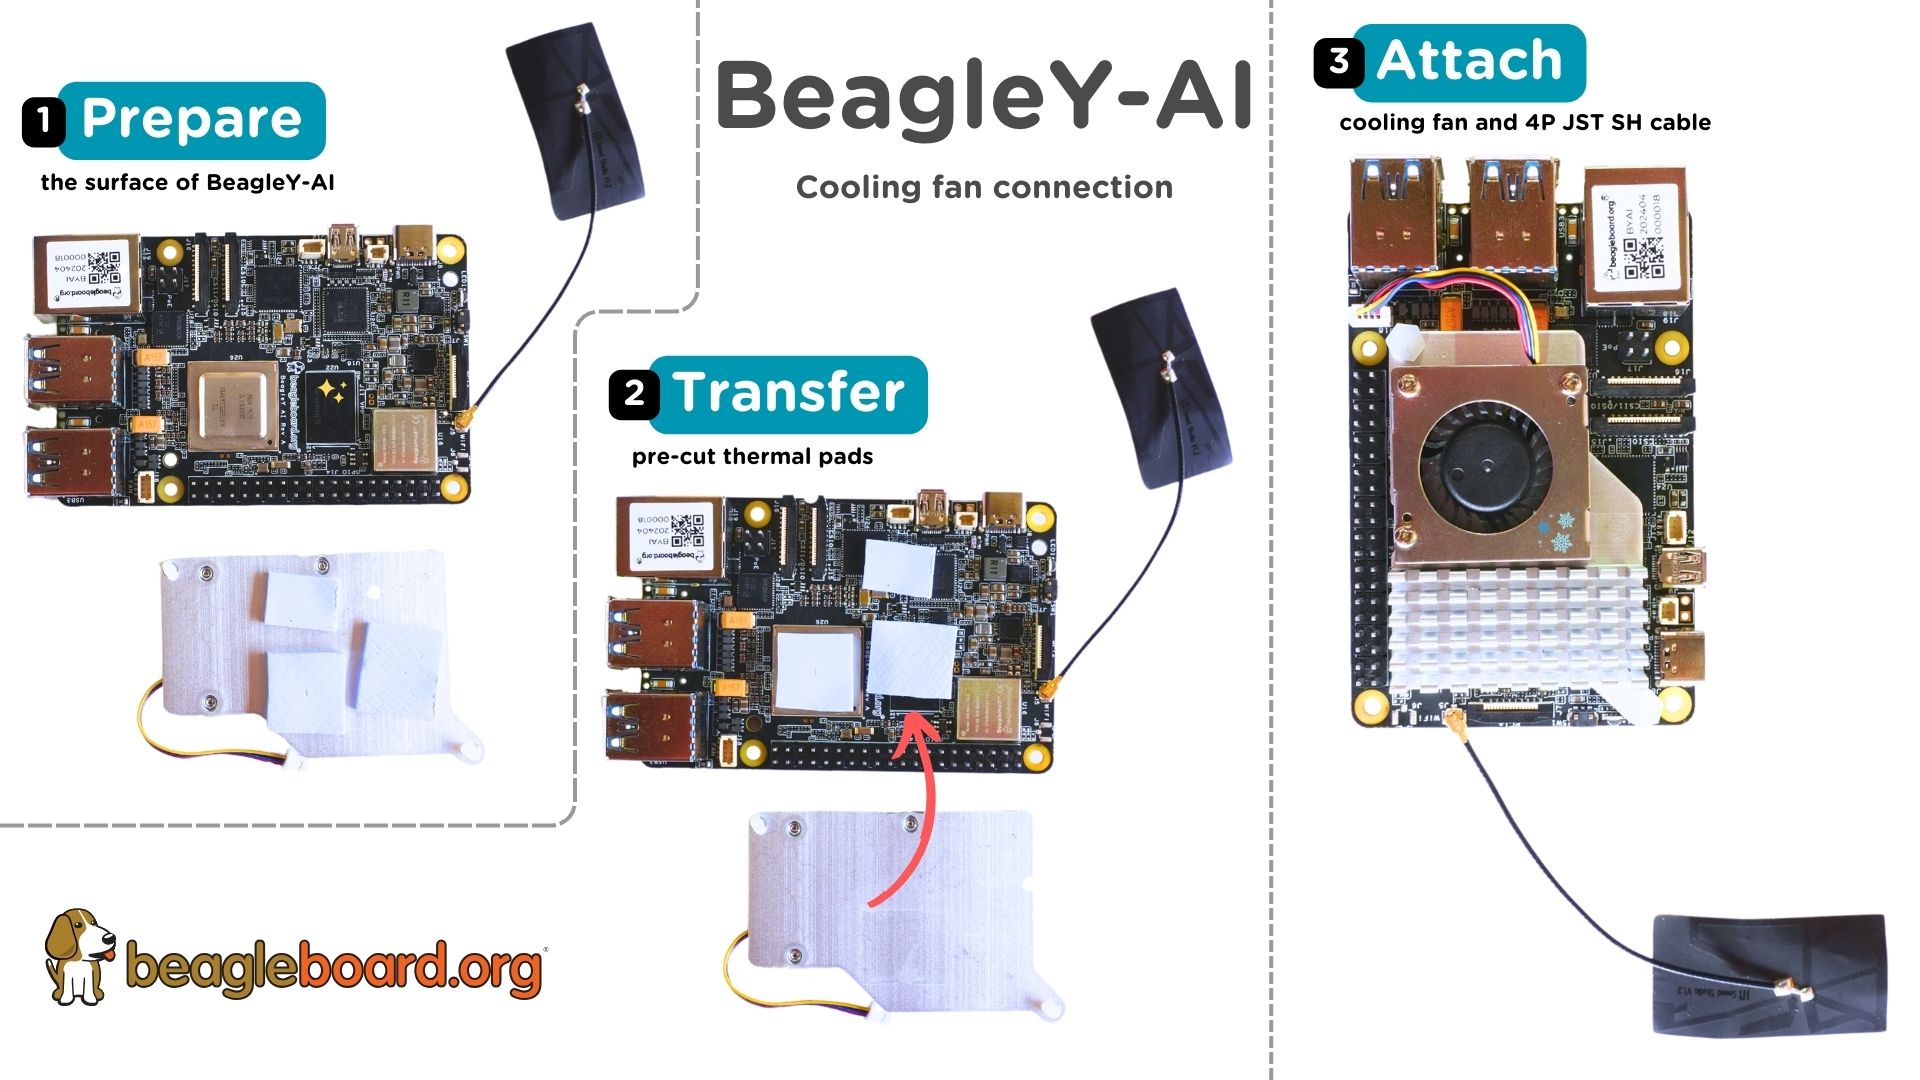 Attaching cooling fan to BeagleY-AI